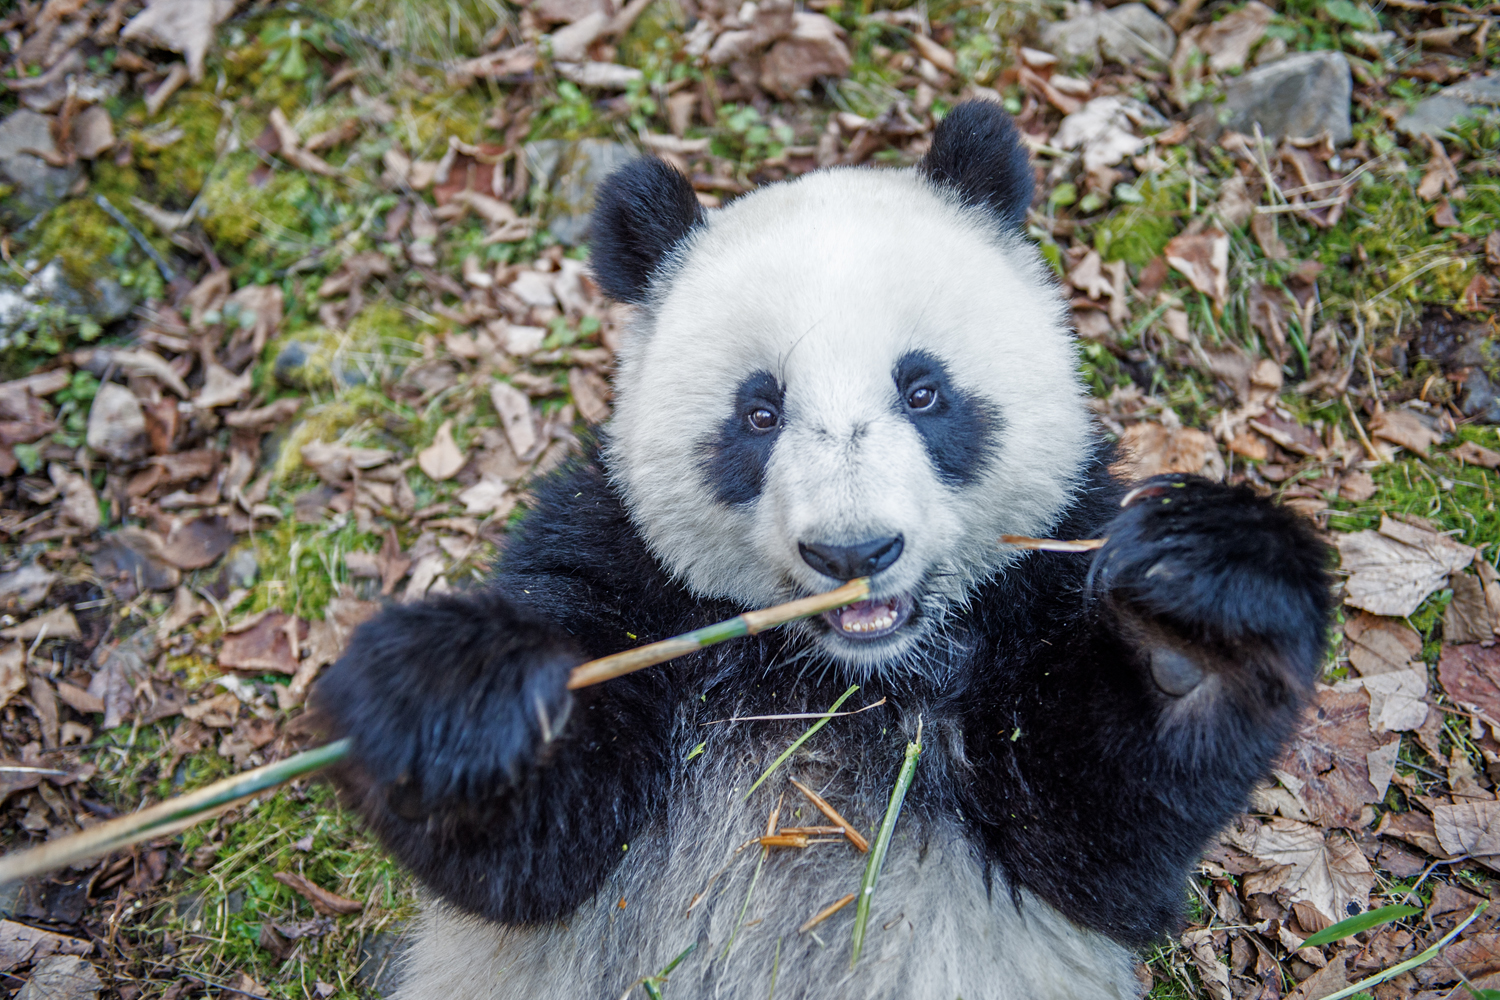 A captive born panda eats bamboo in the Deng Sheng Valley forestin Sichuan China